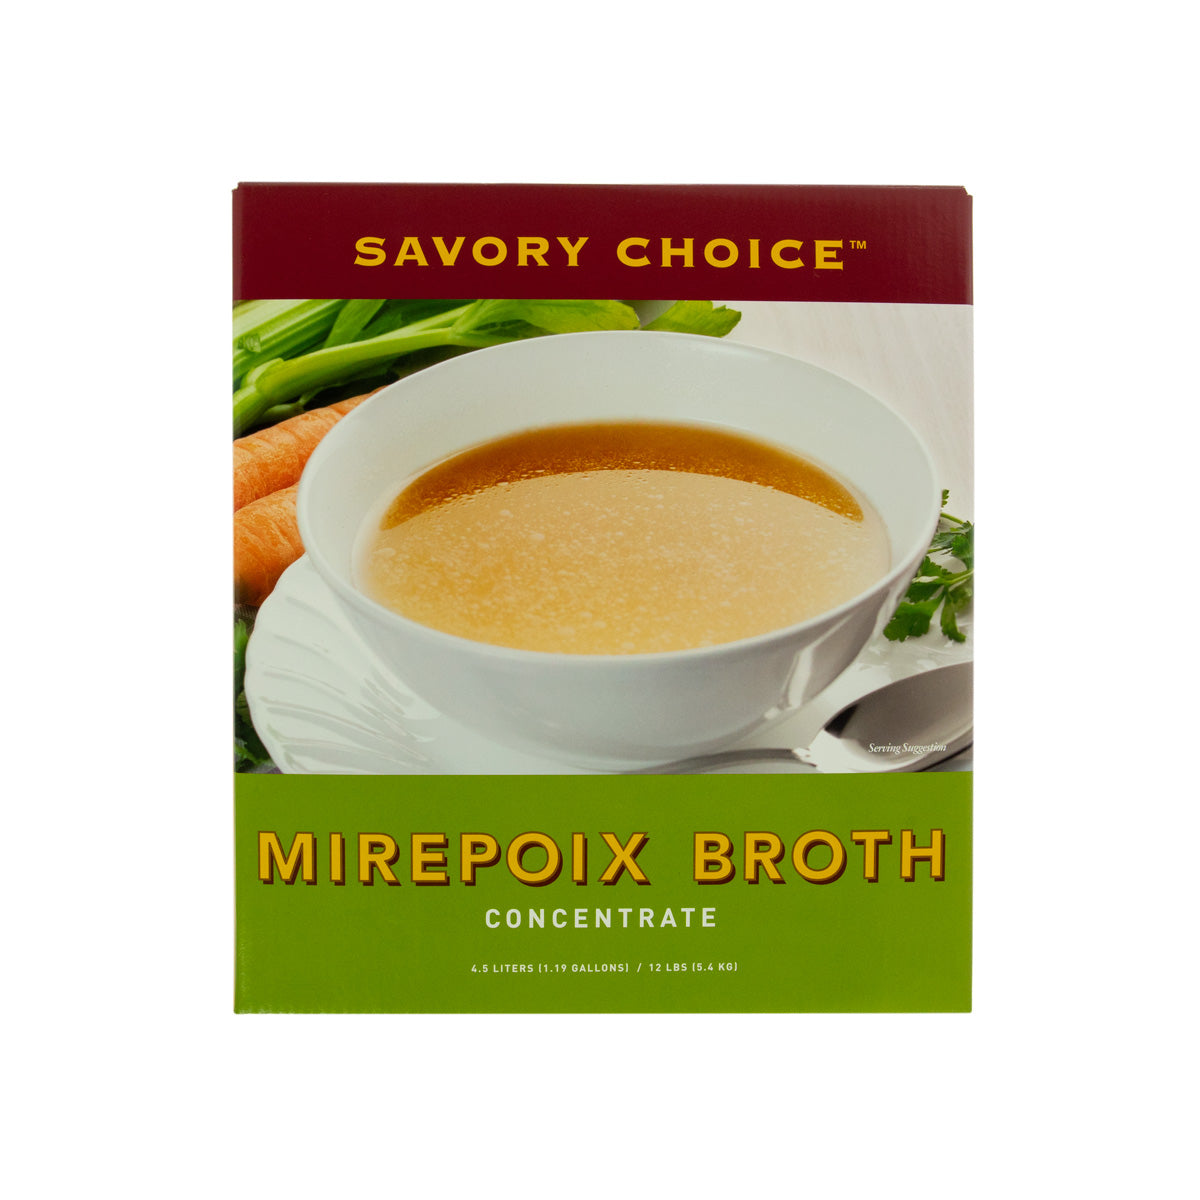 Savory Choice Mirpoix Broth